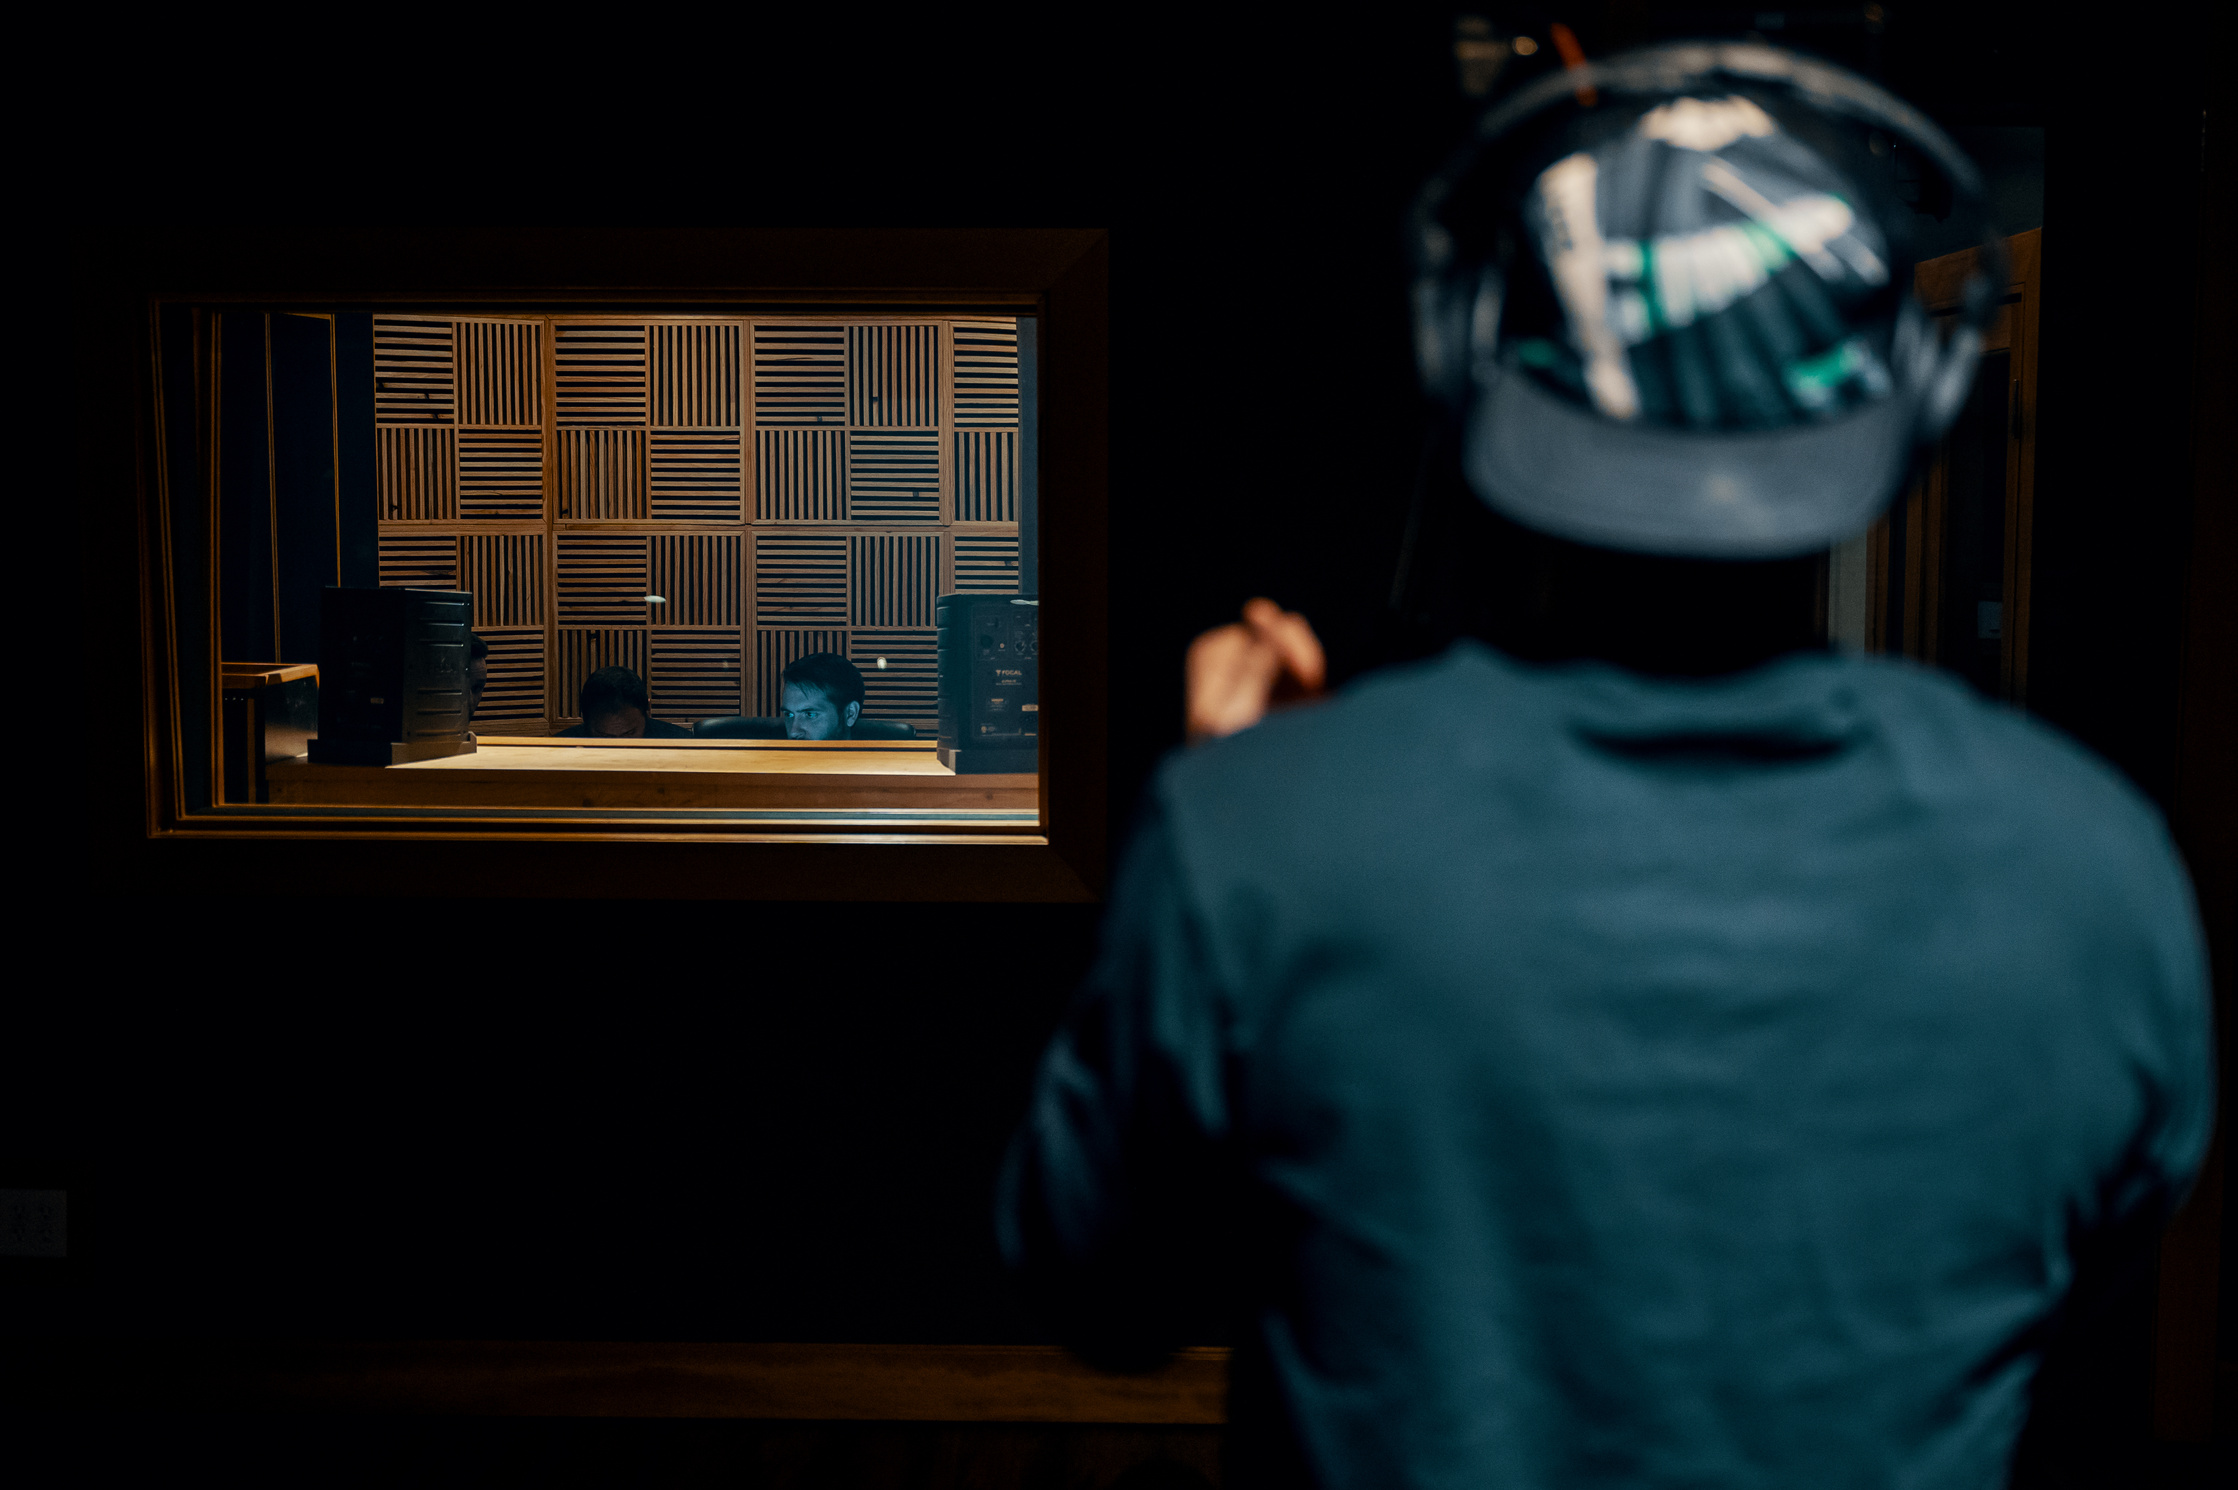 Man Inside The Recording Studio